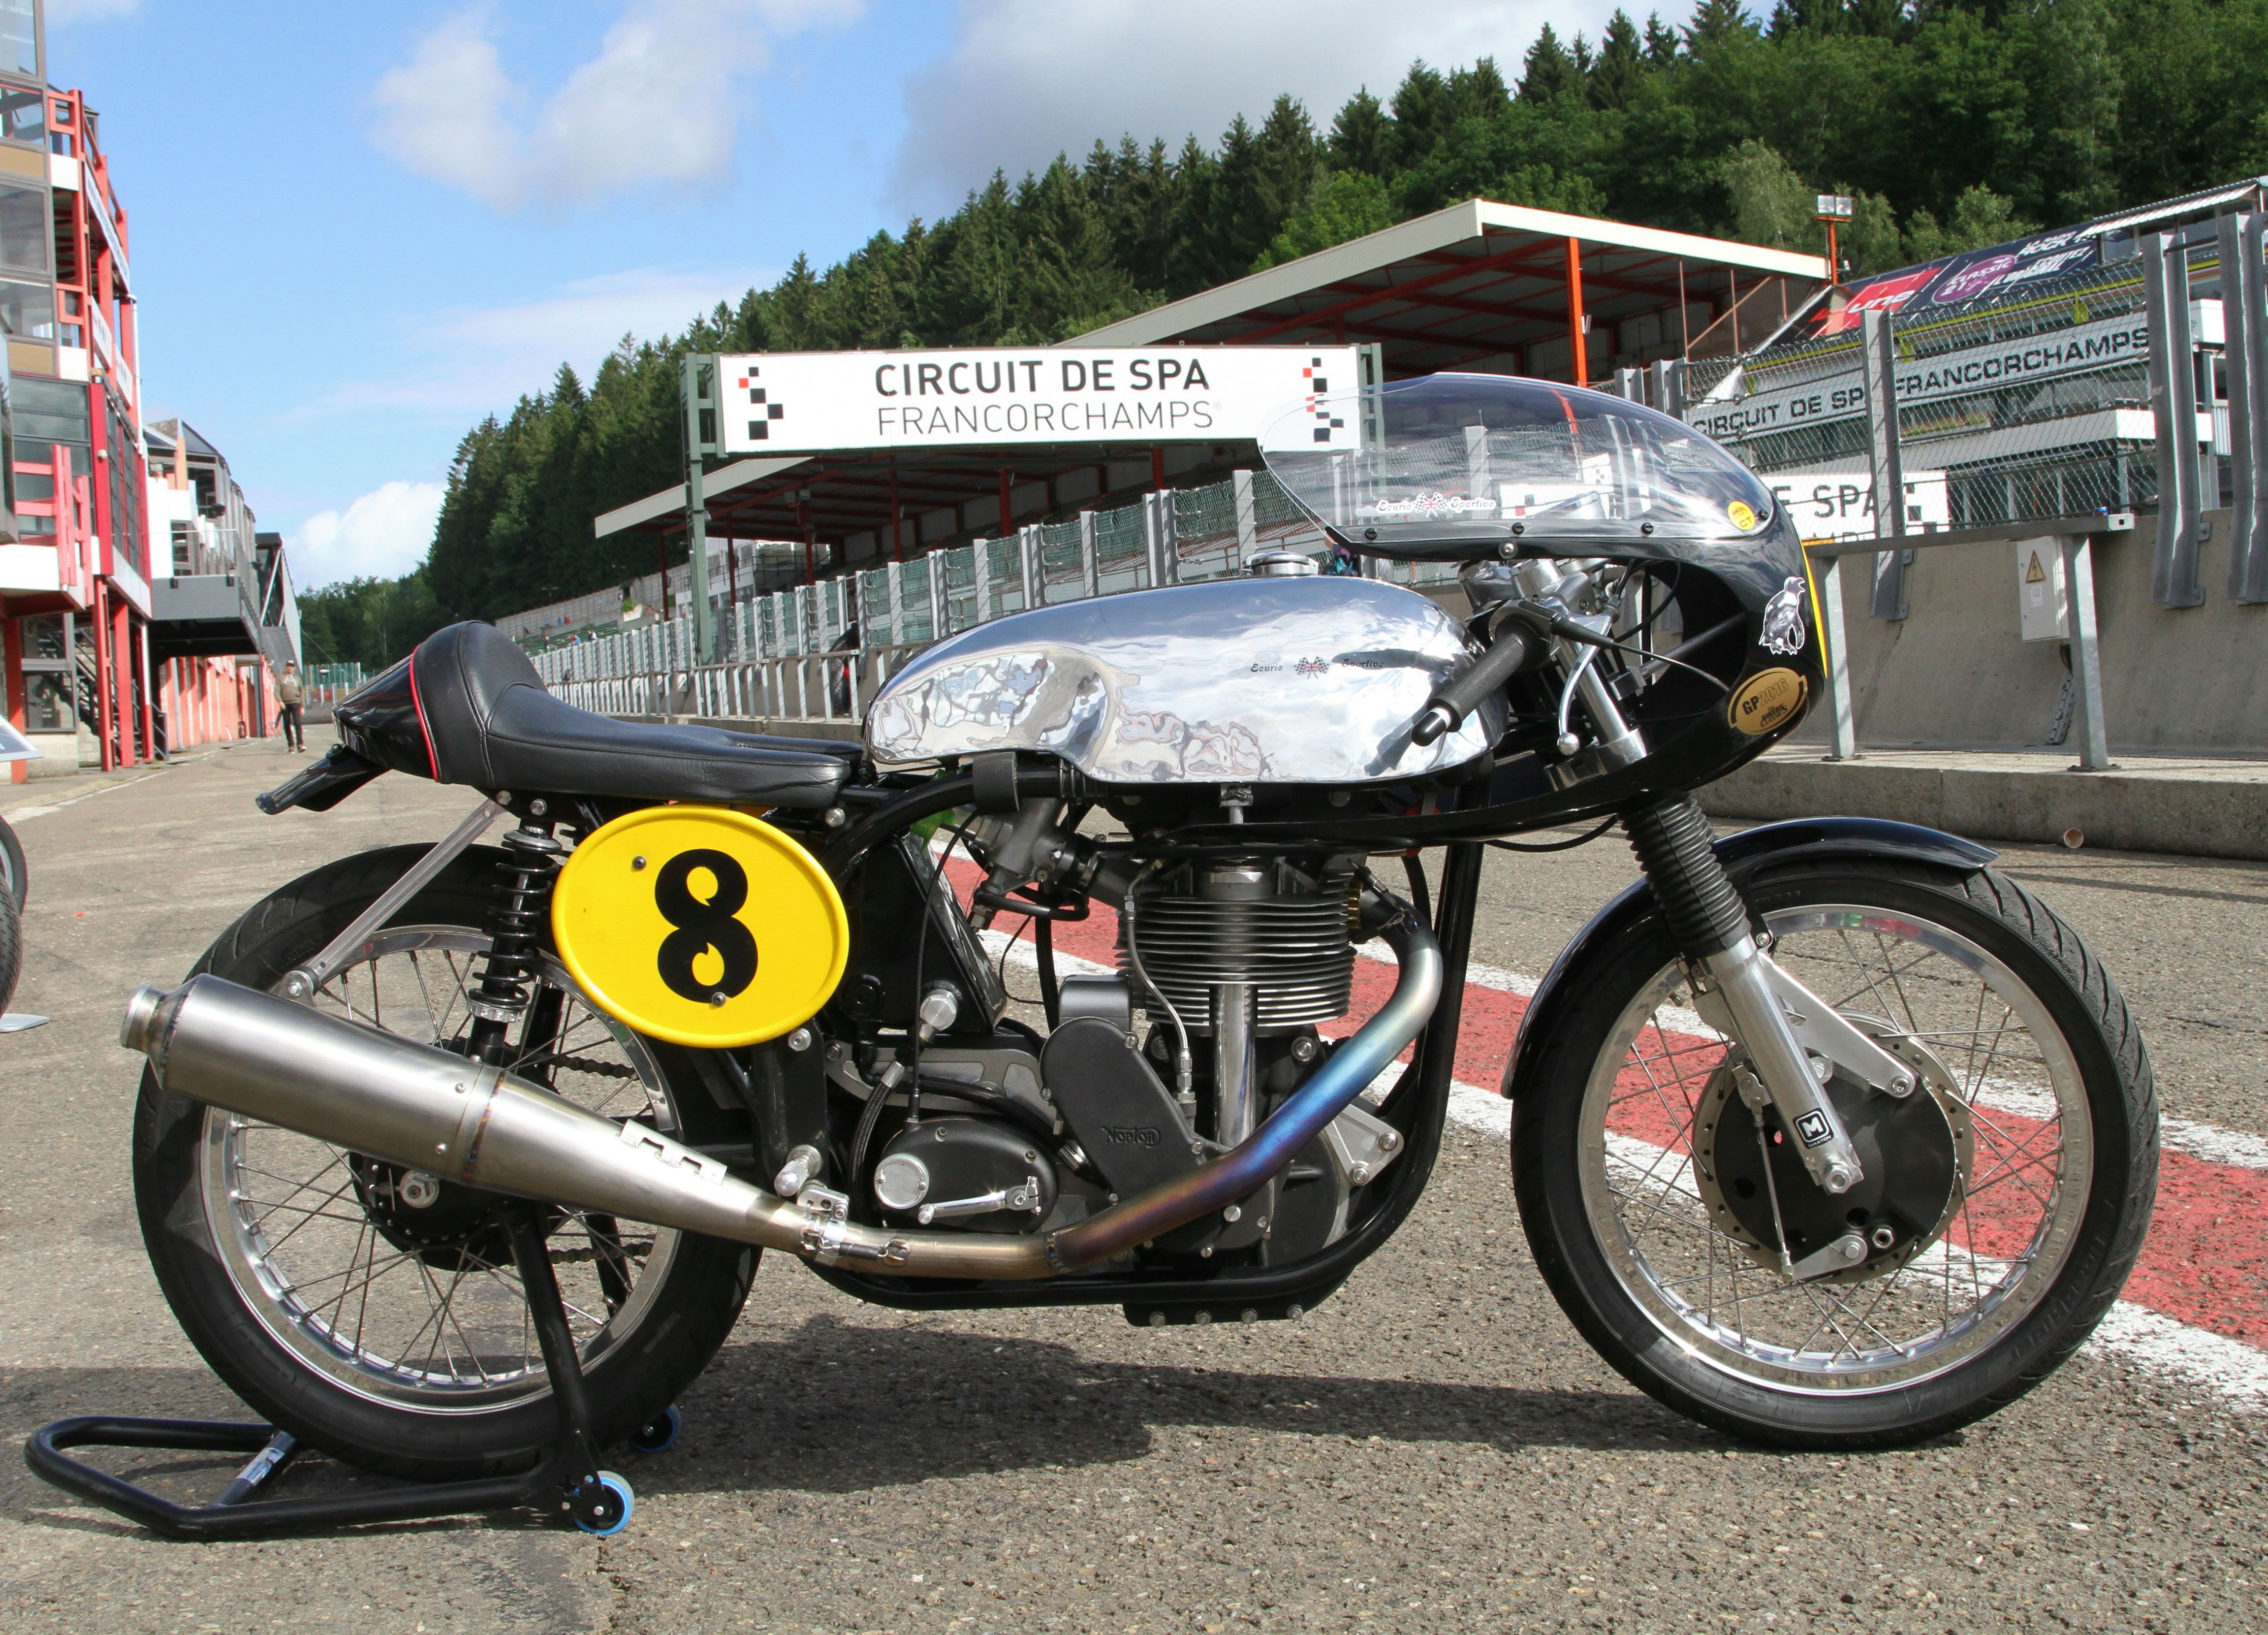 500 ES Norton motorbike with number 8